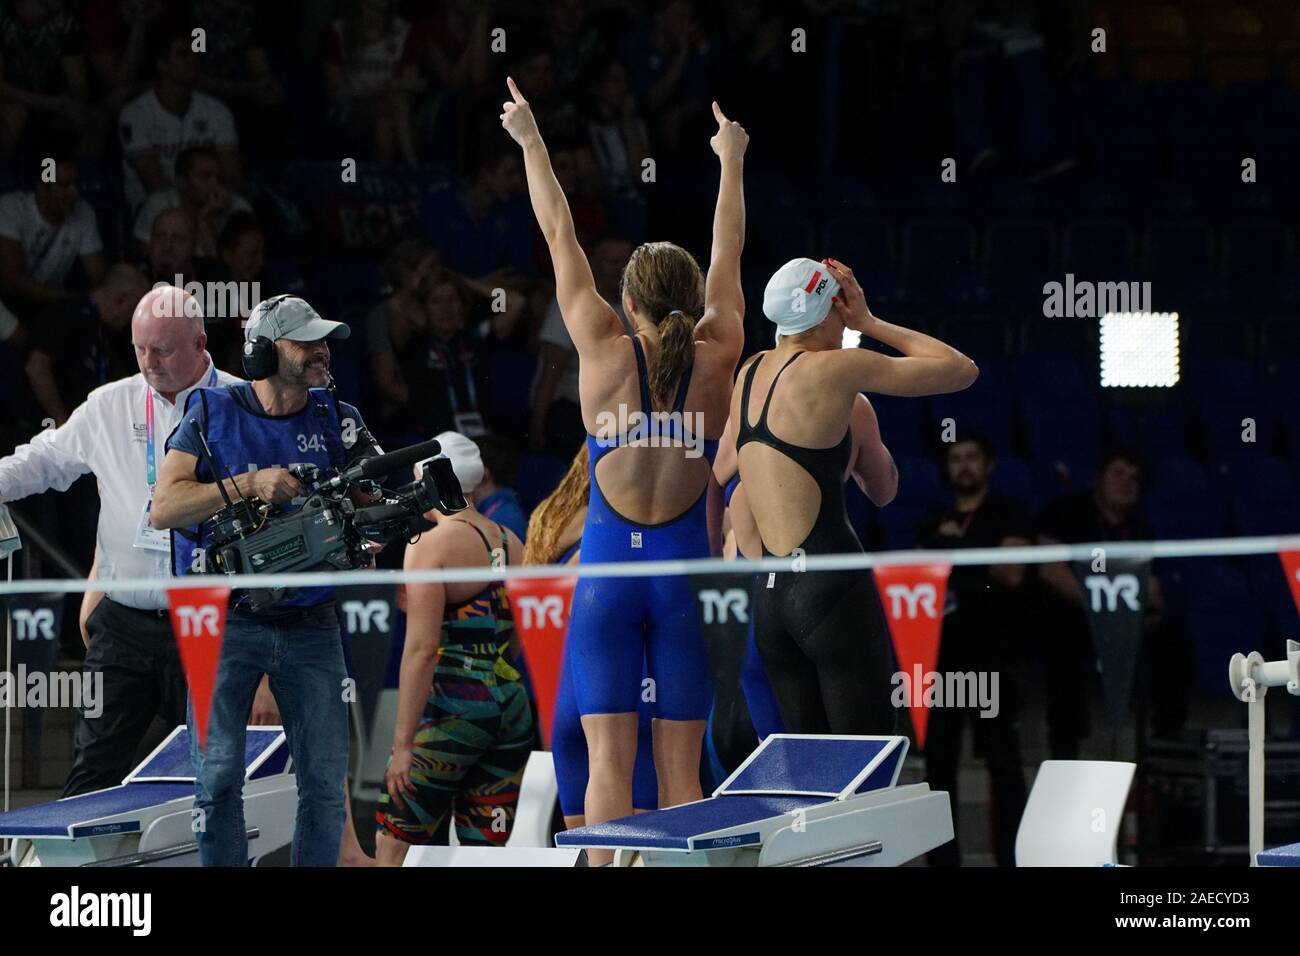 Glasgow, UK. 8th Dec, 2019. Poland wins gold in Womens 4x50 Medley final on LEN European Short Course Swimming Championships 2019, Glashow, UK. Credit: Pawel Pietraszewski/Alamy Live News Stock Photo